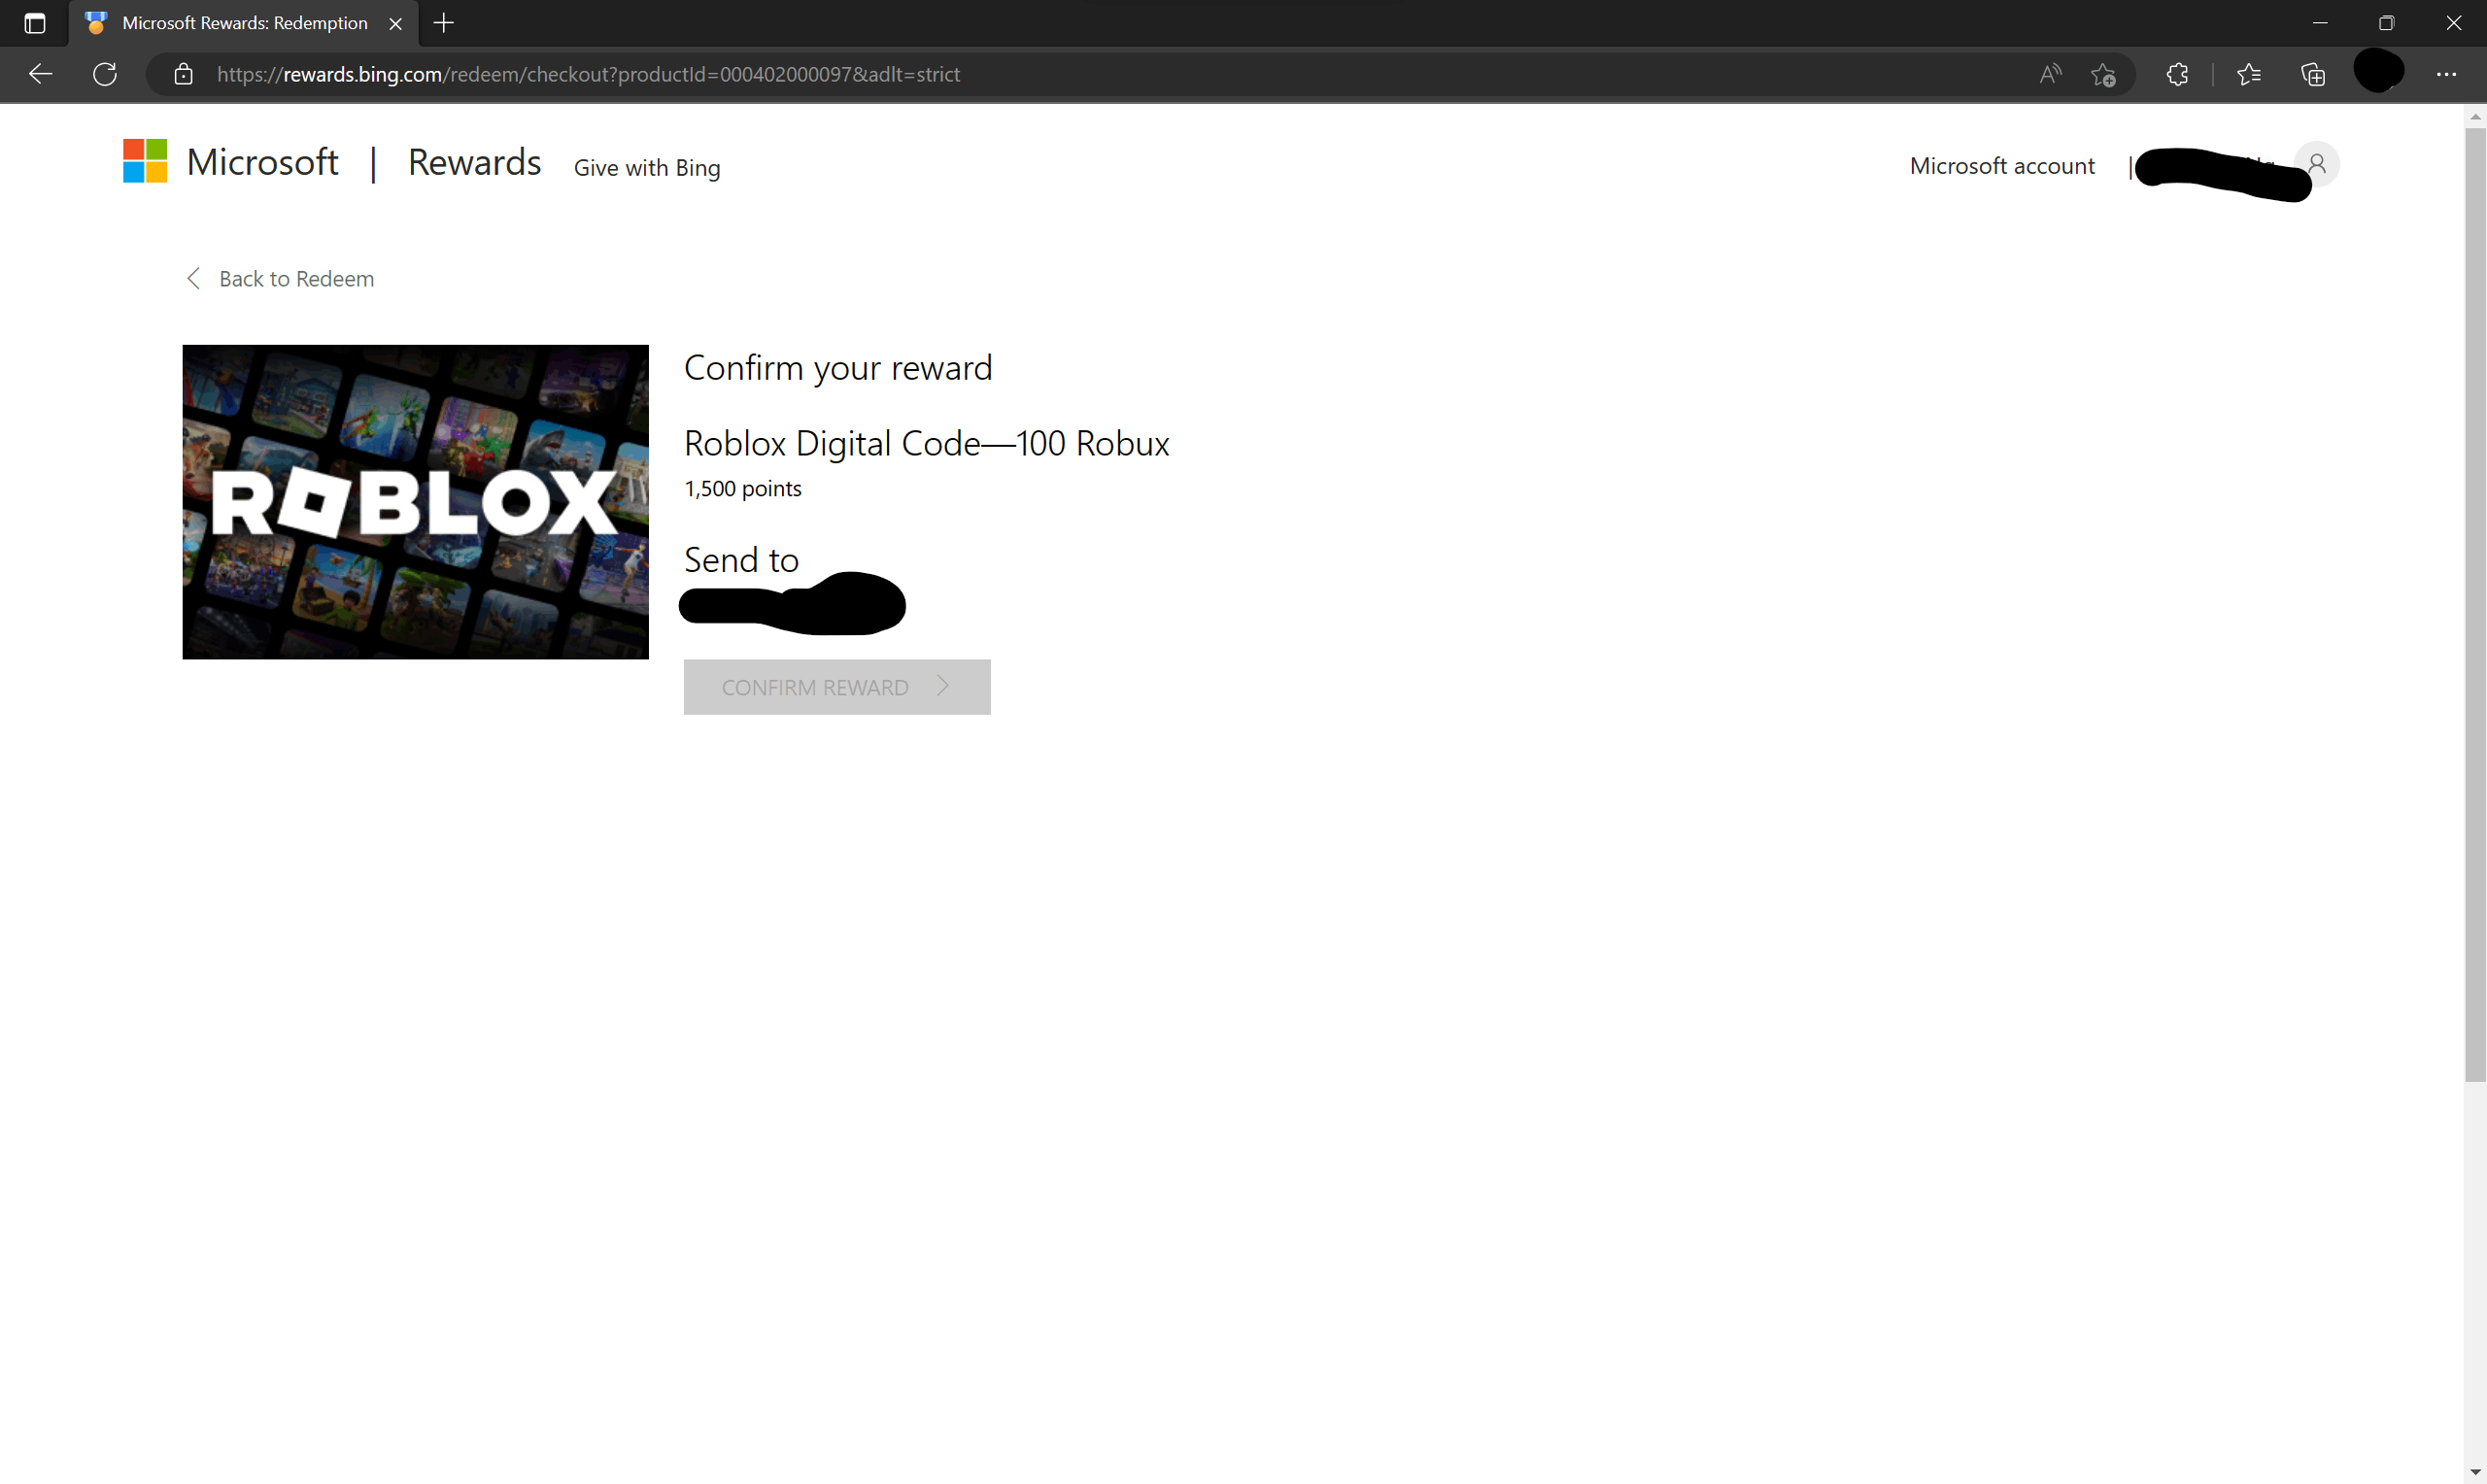 I can't get free 100 robux - Microsoft Community